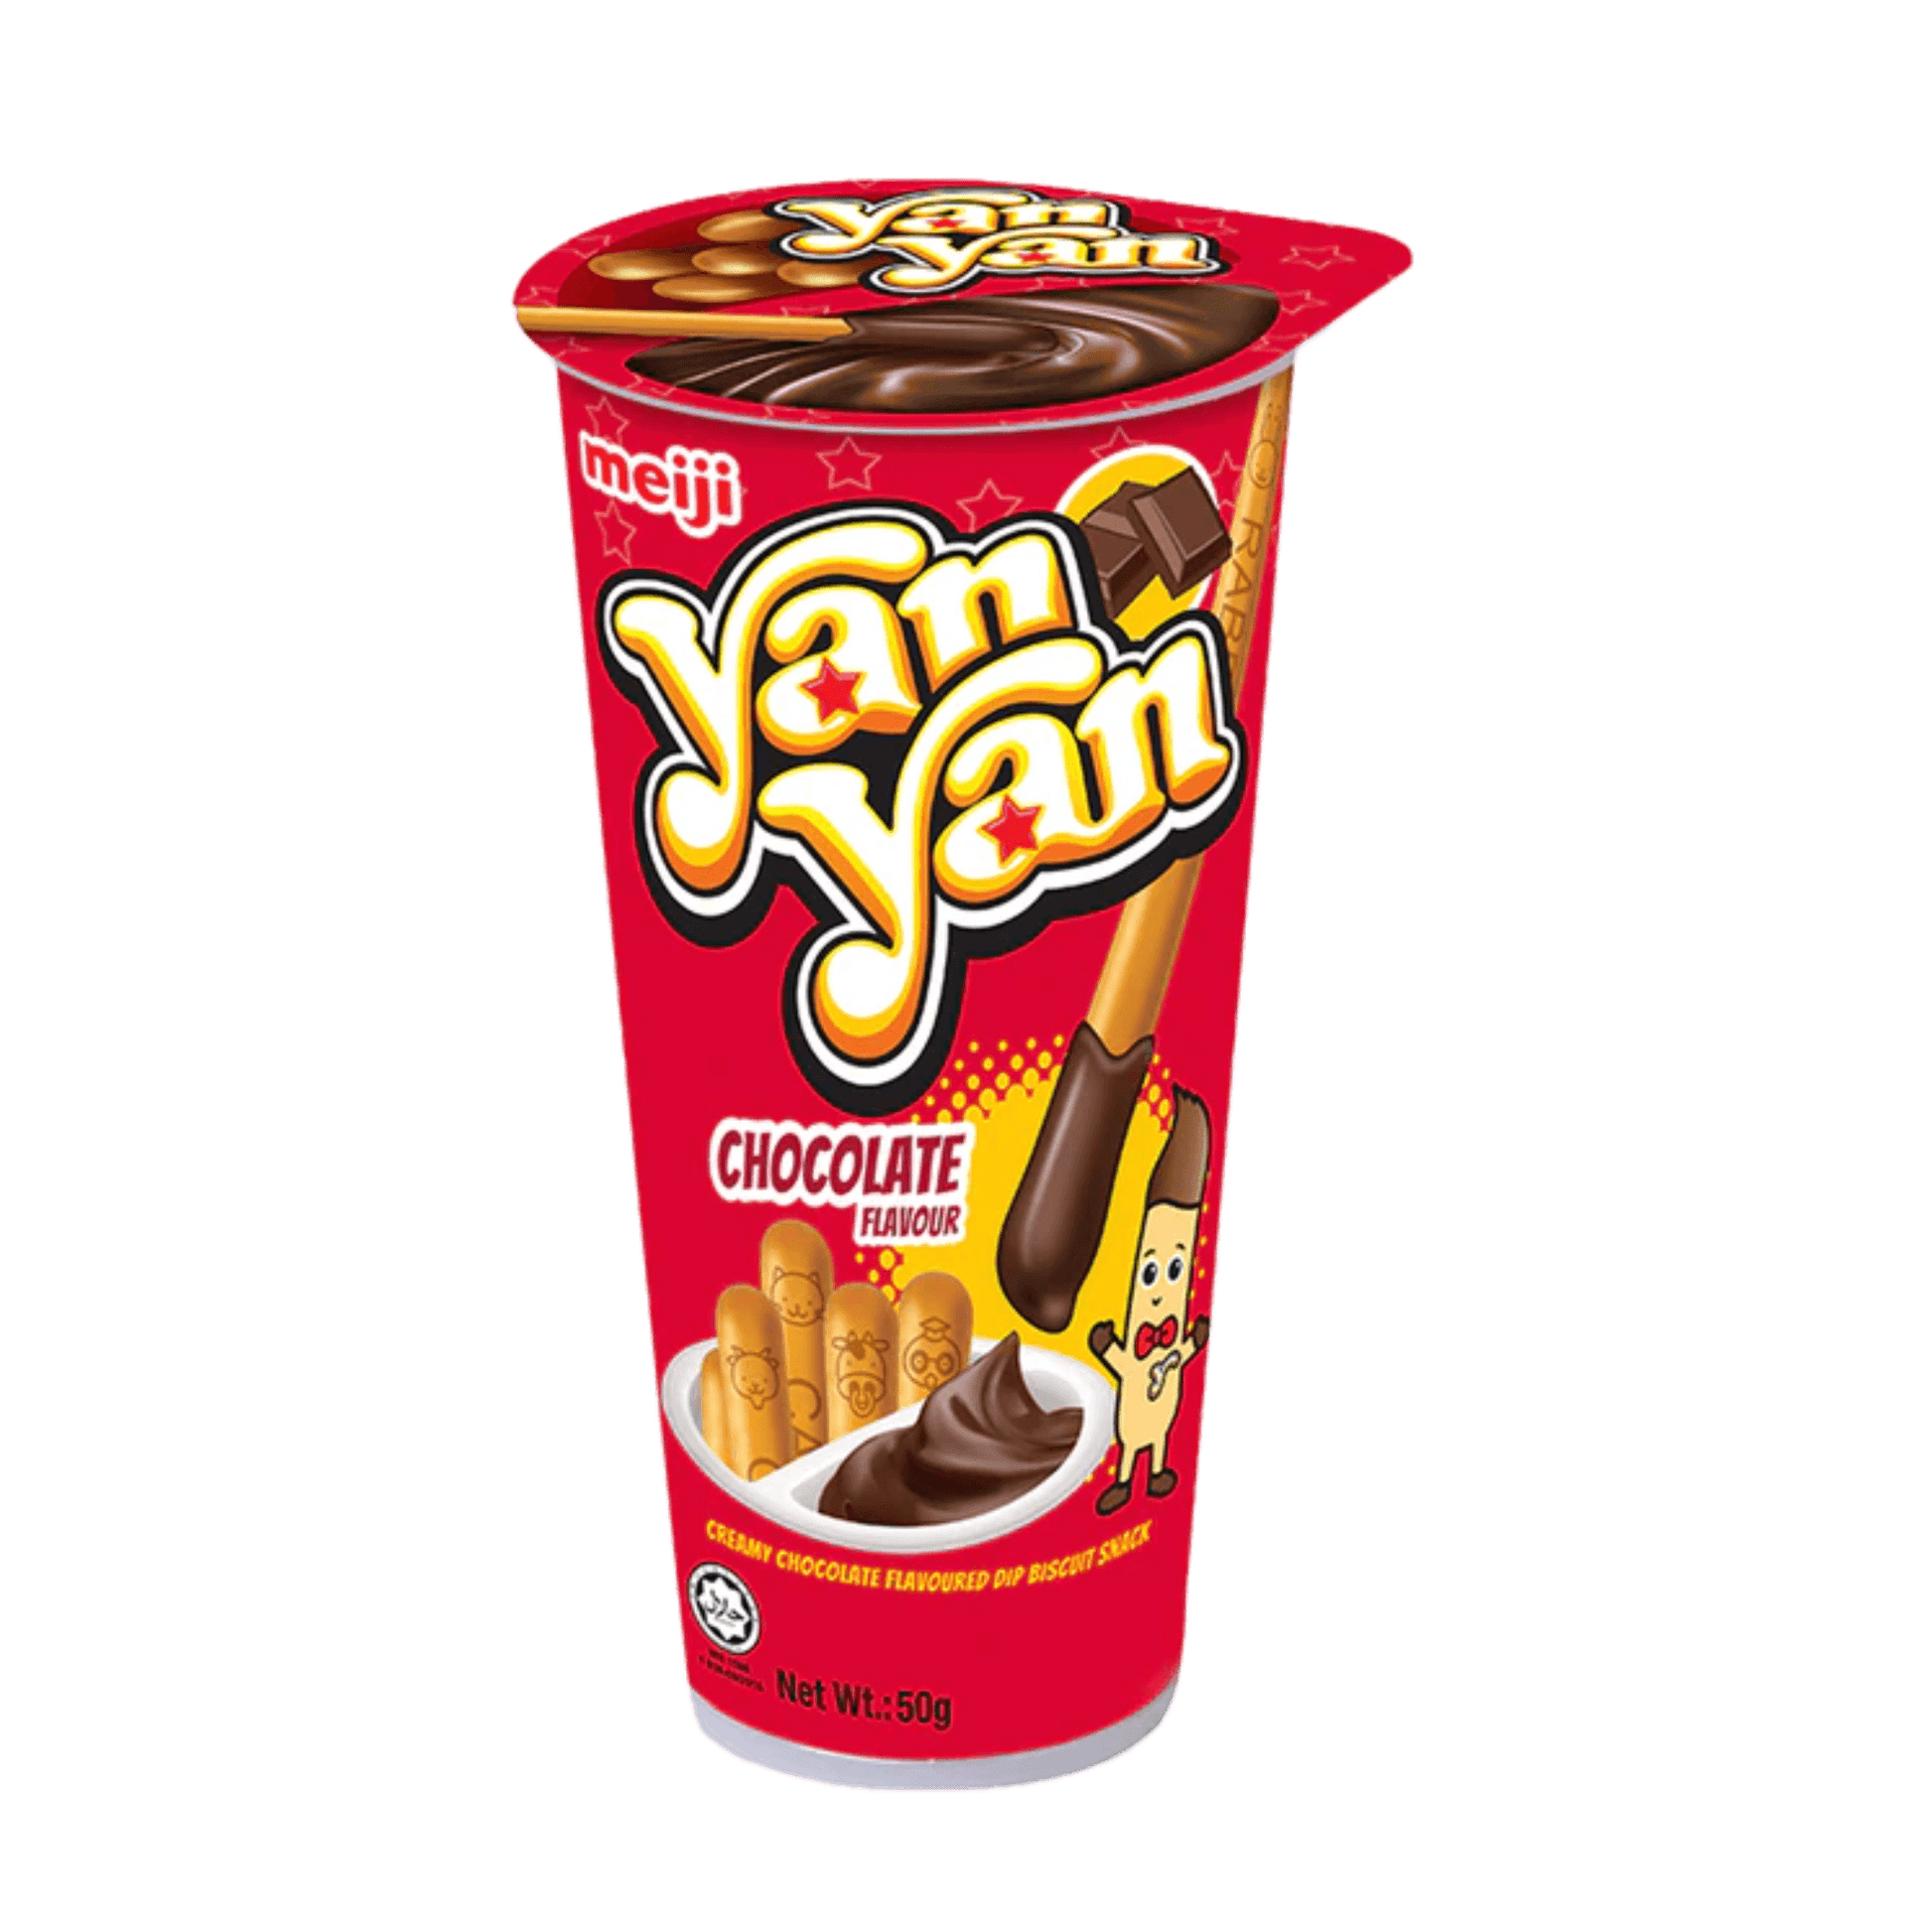 Meiji | Yan Yan Chocolate (80g) - Chips - Scran.ie